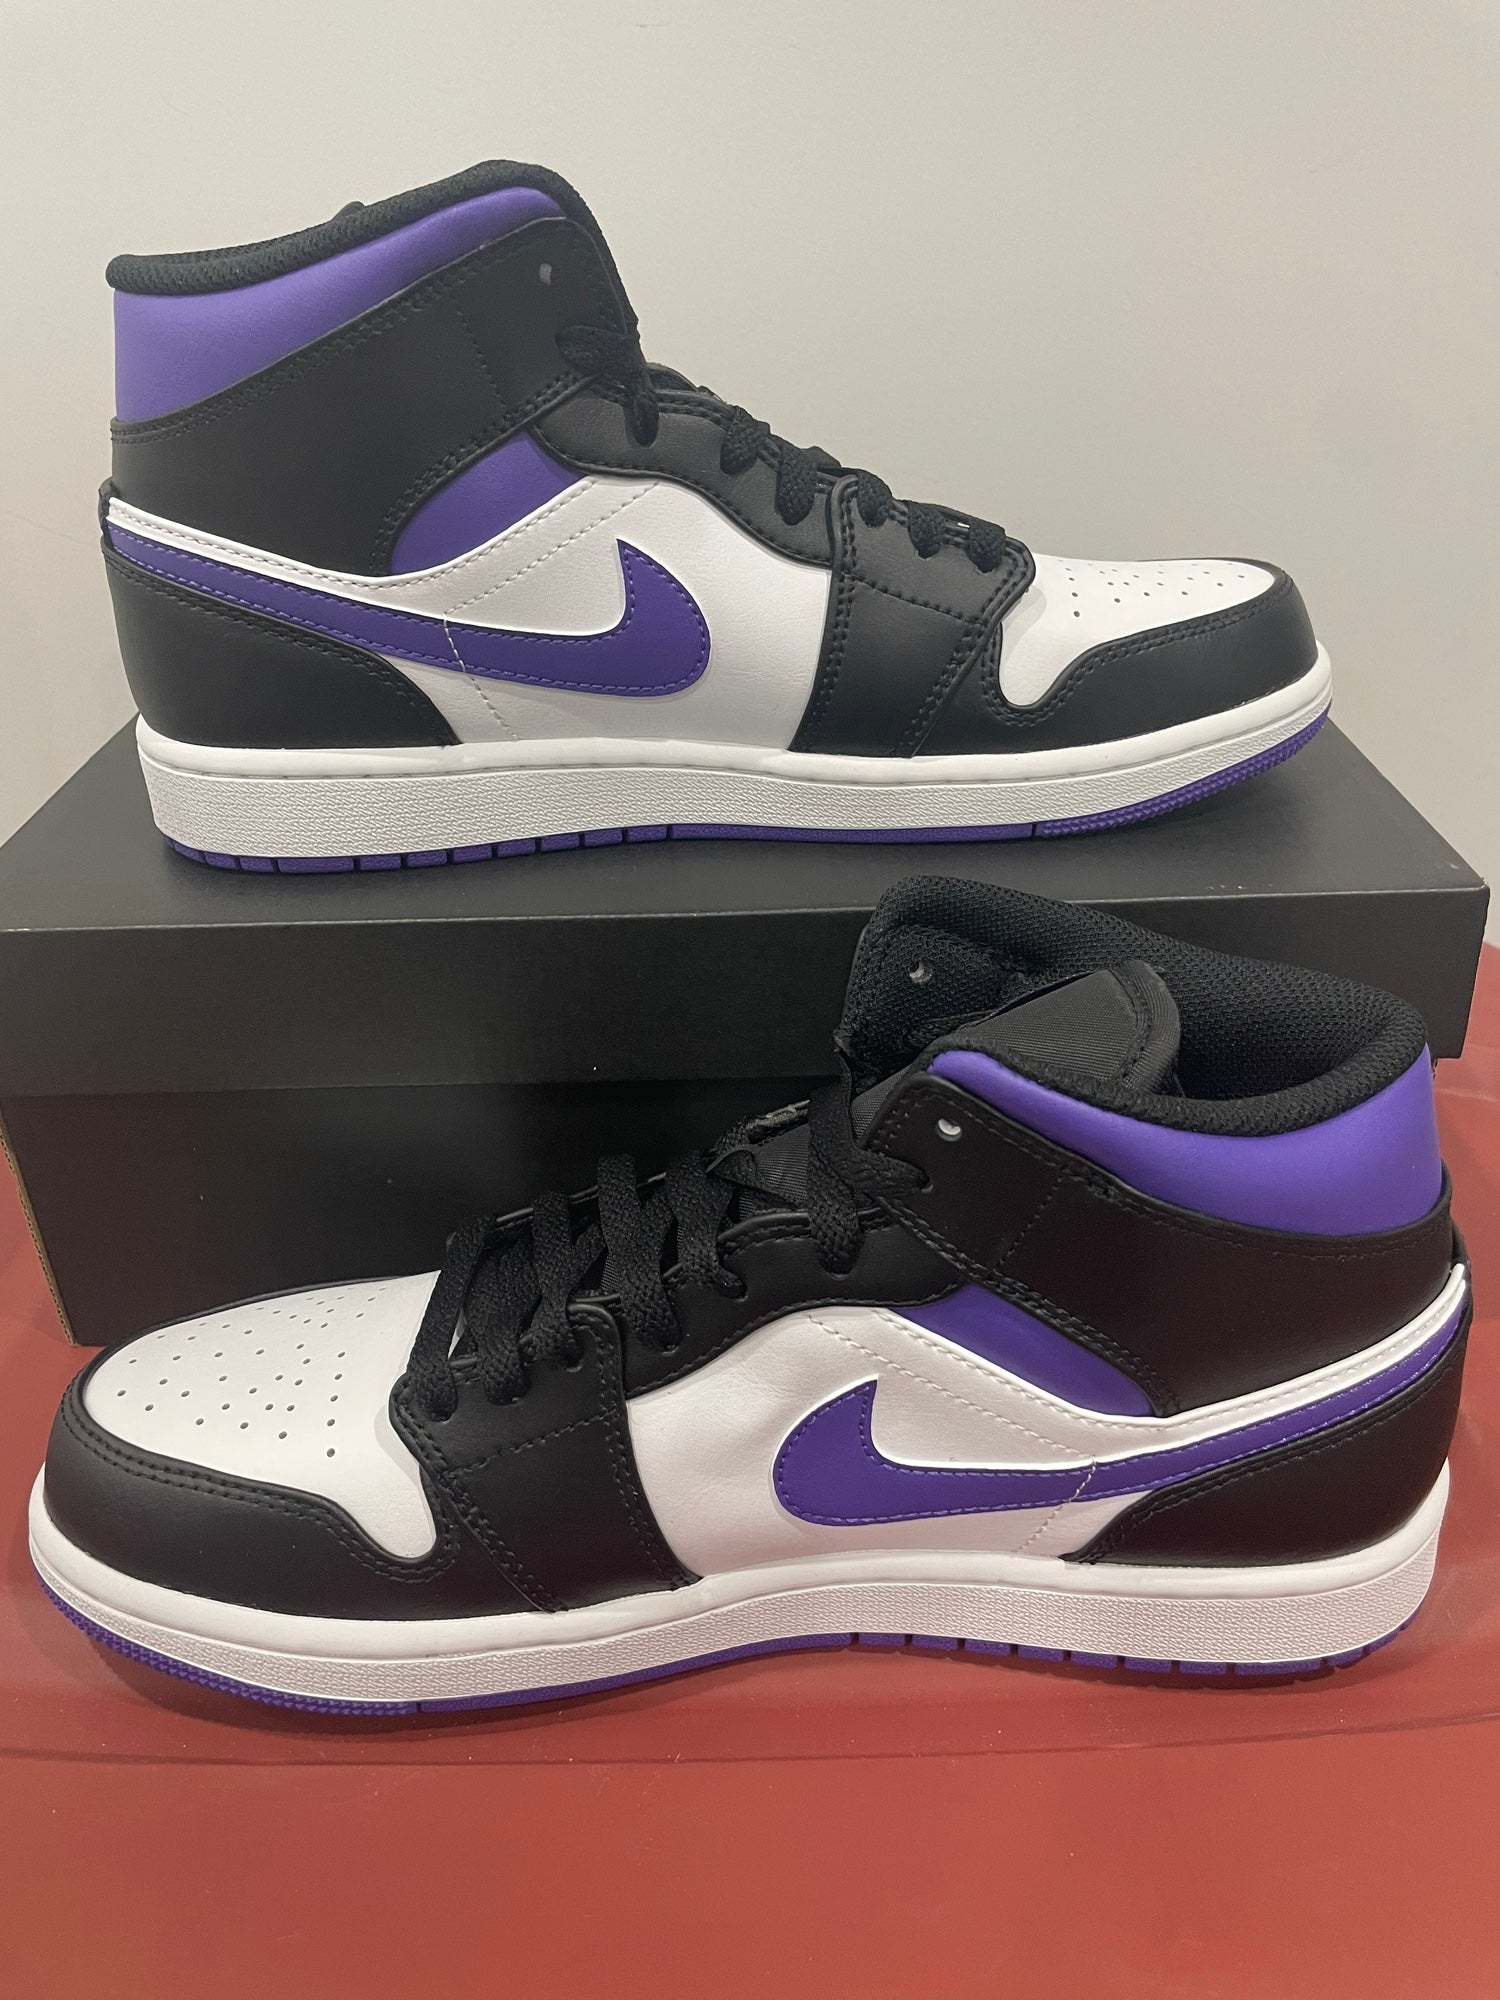 New Nike Air Jordan 1 Mid Shoes Court Purple 554724-095 Men's US Size 9.5-  in box